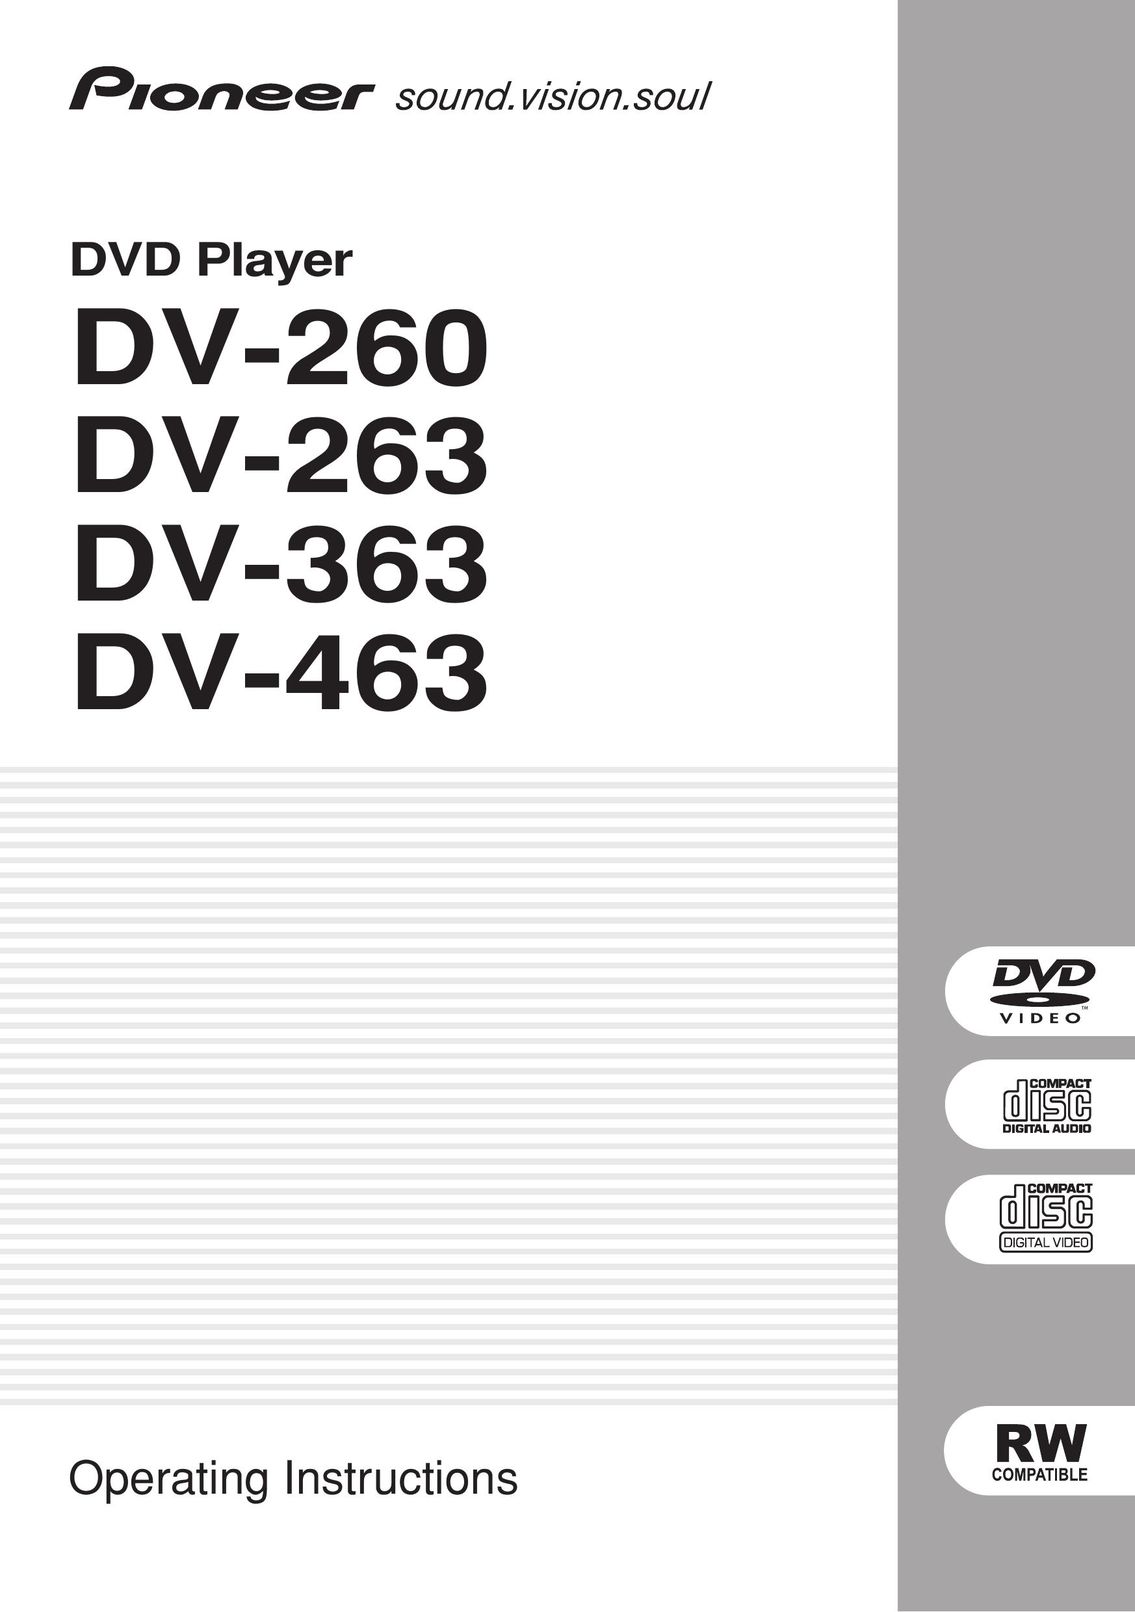 Pioneer DV-263 DVD Player User Manual